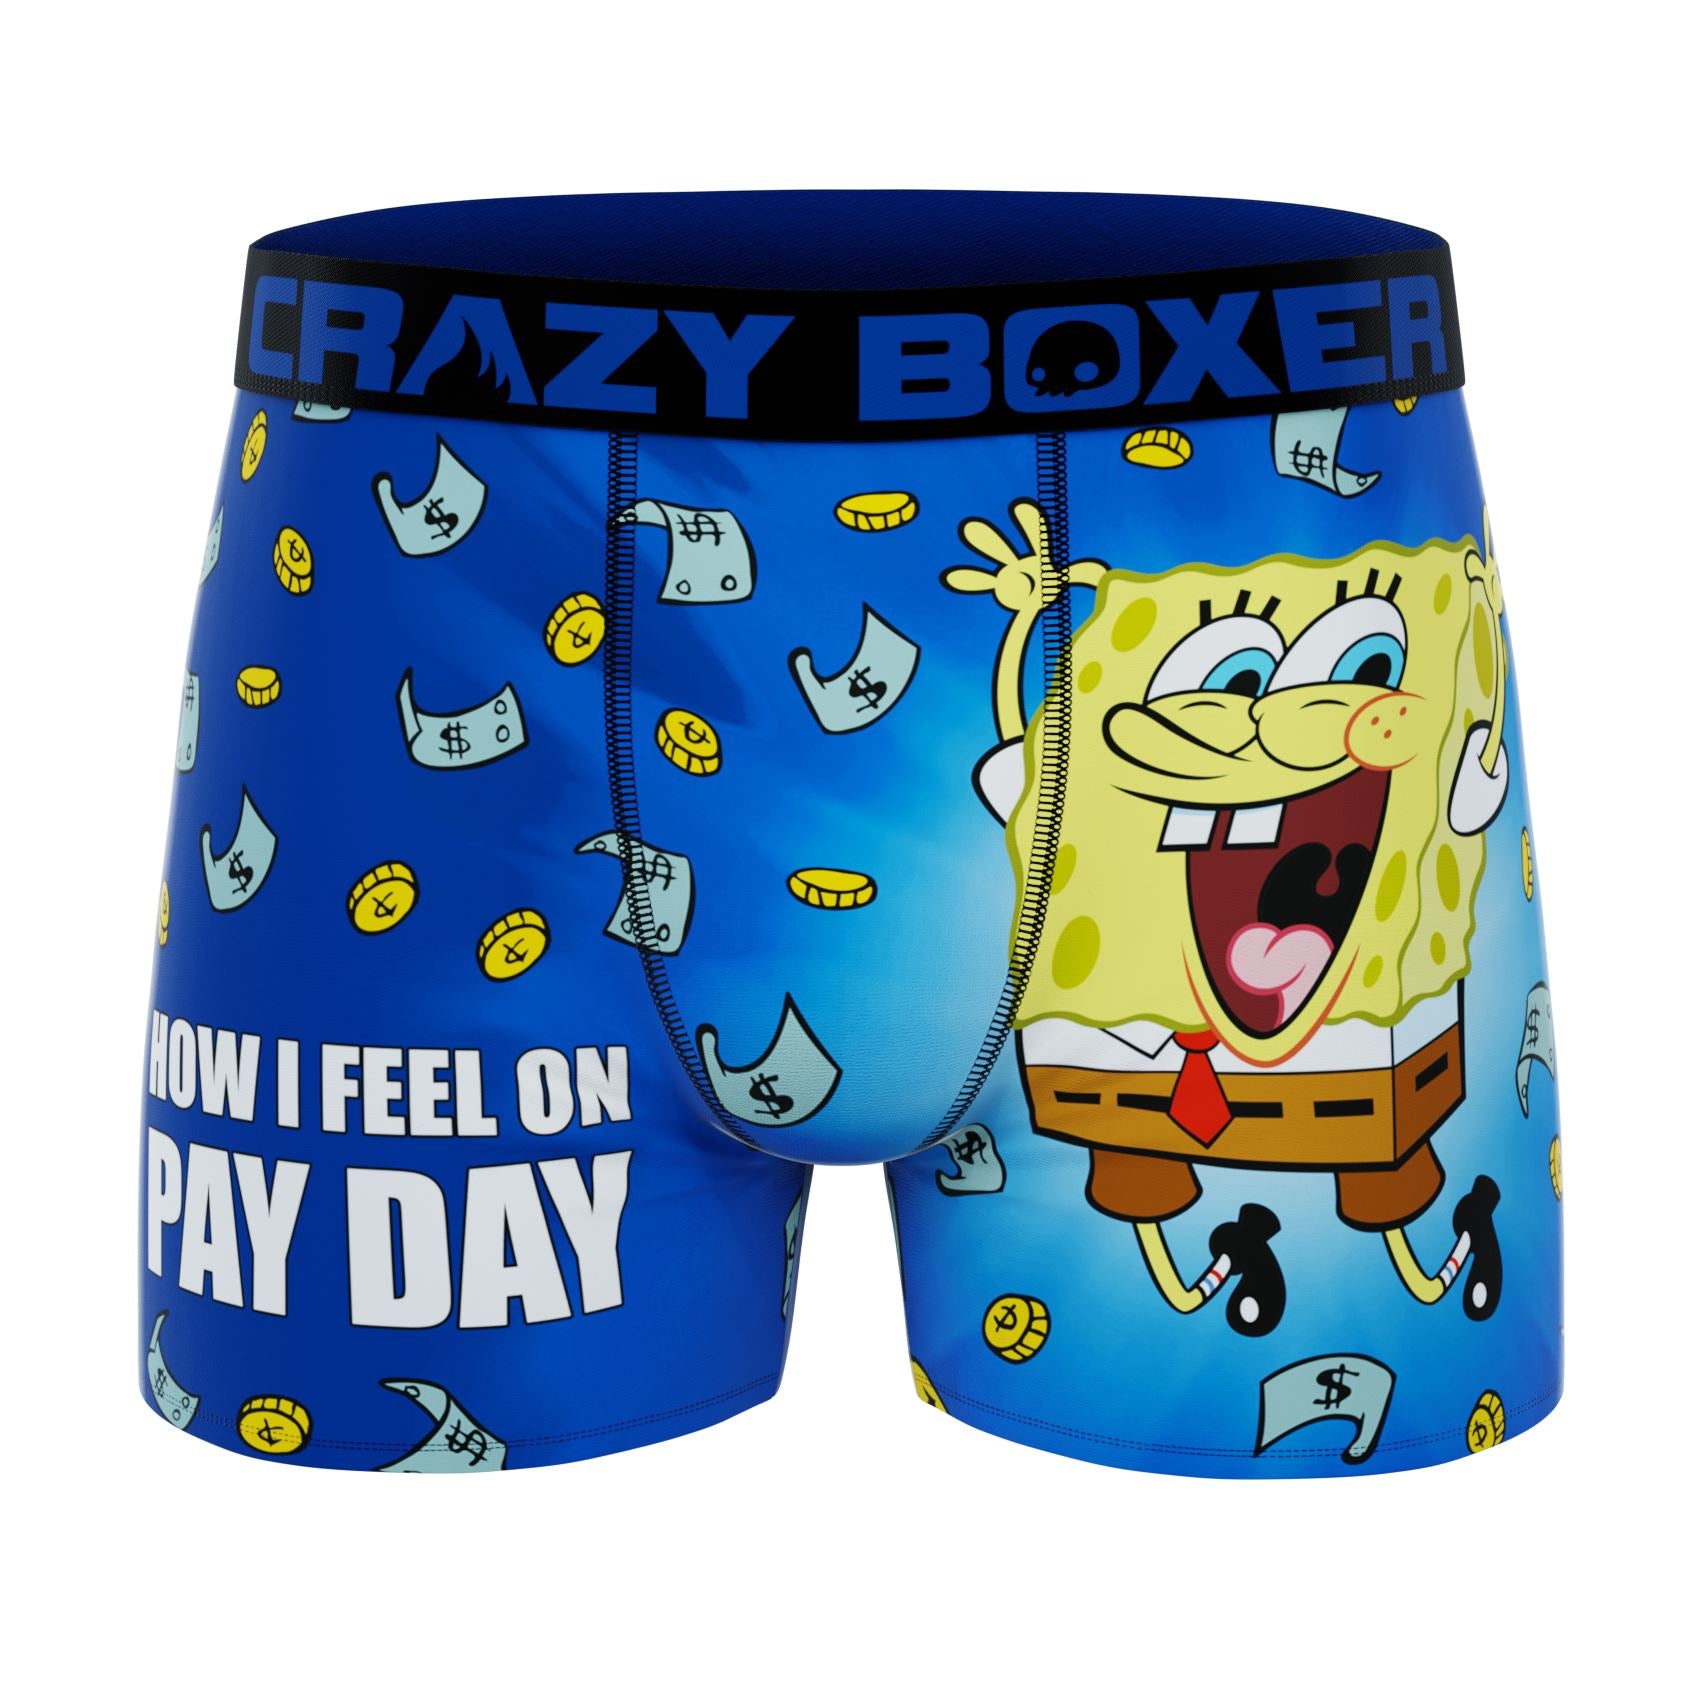 CRAZYBOXER Spongebob Pay Day Be Like Men's Boxer Briefs